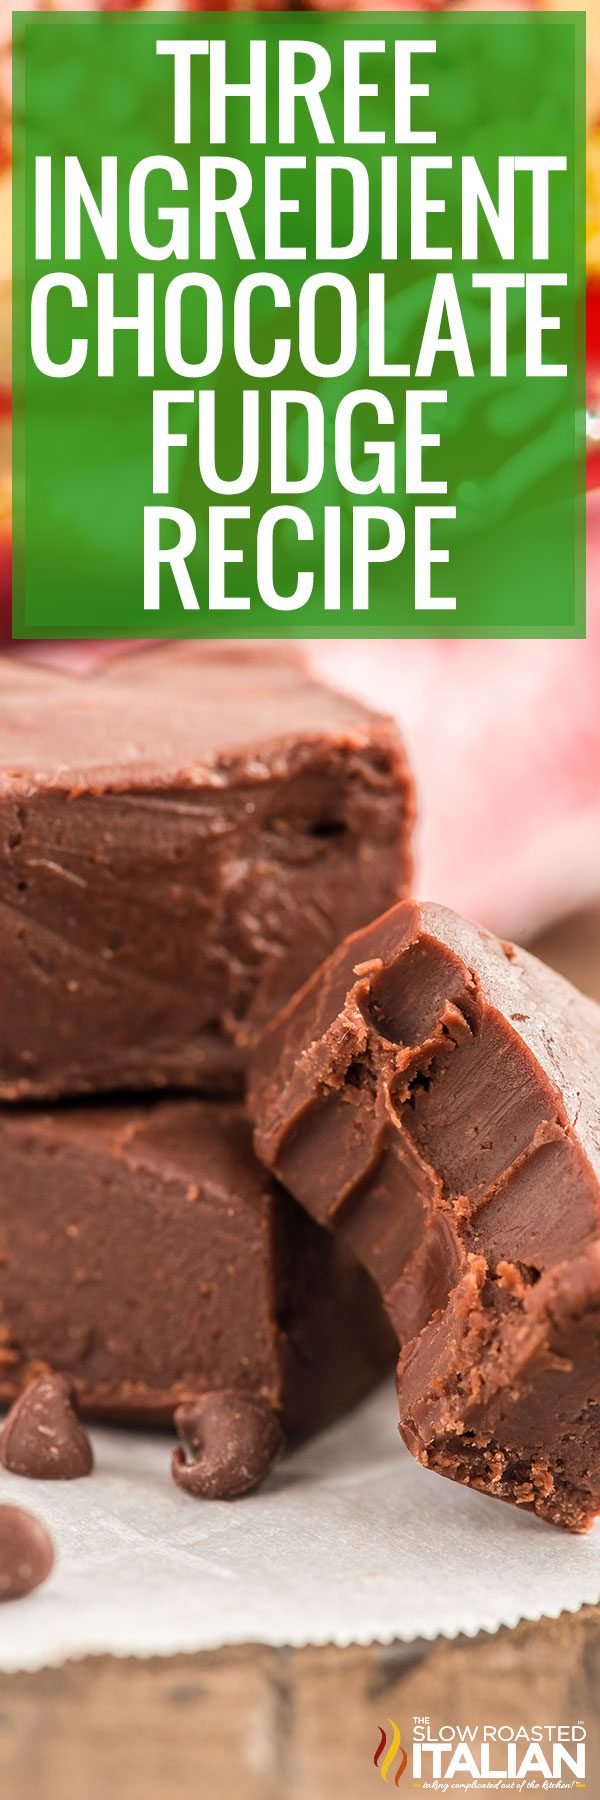 titled image (and shown): three ingredient chocolate fudge recipe